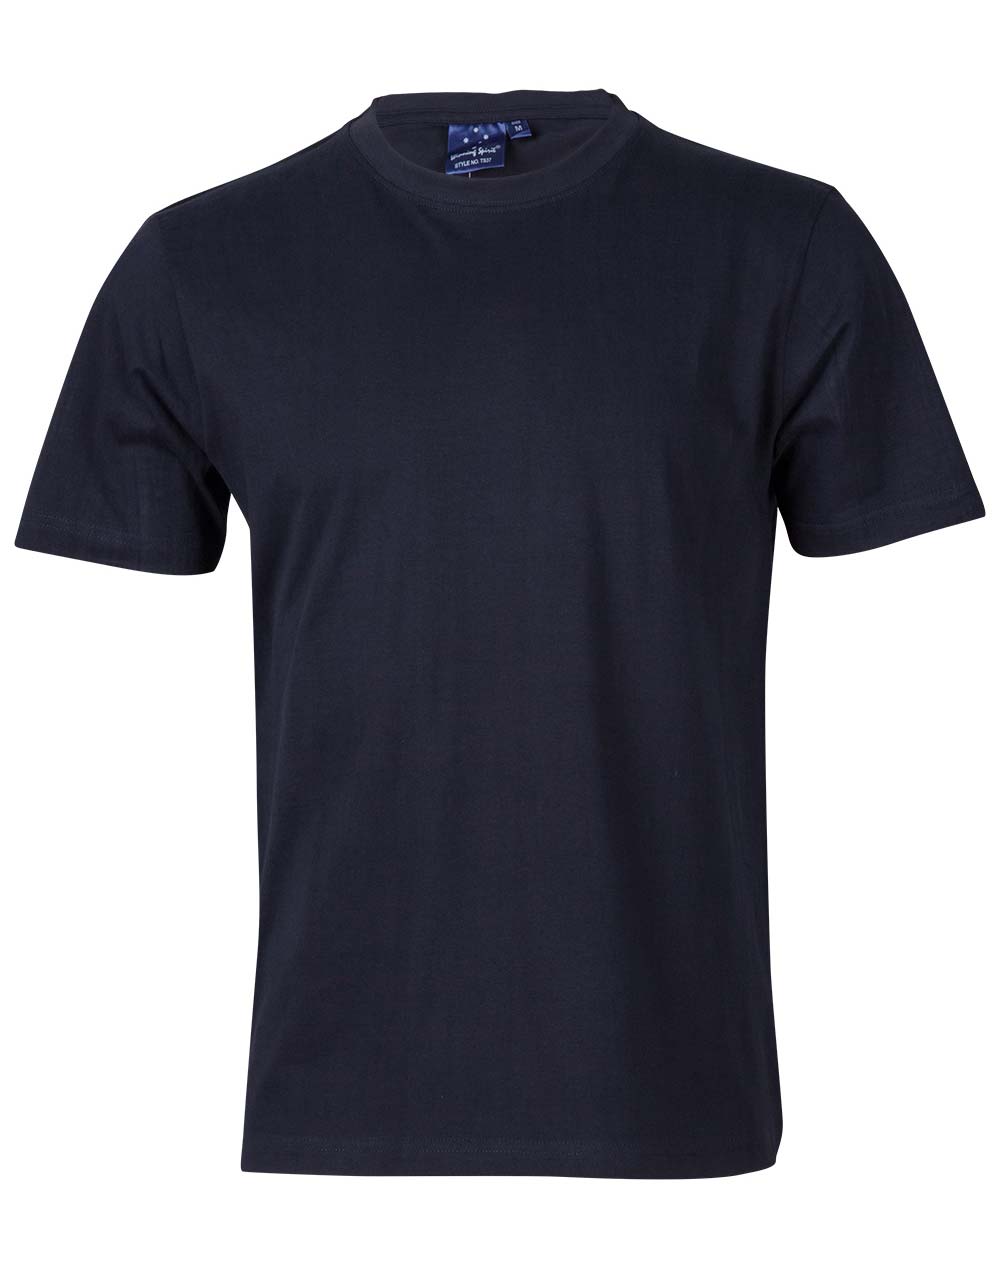 Custom (Cyan) Semi-Fitted T-Shirts Men's Online in Perh Australia